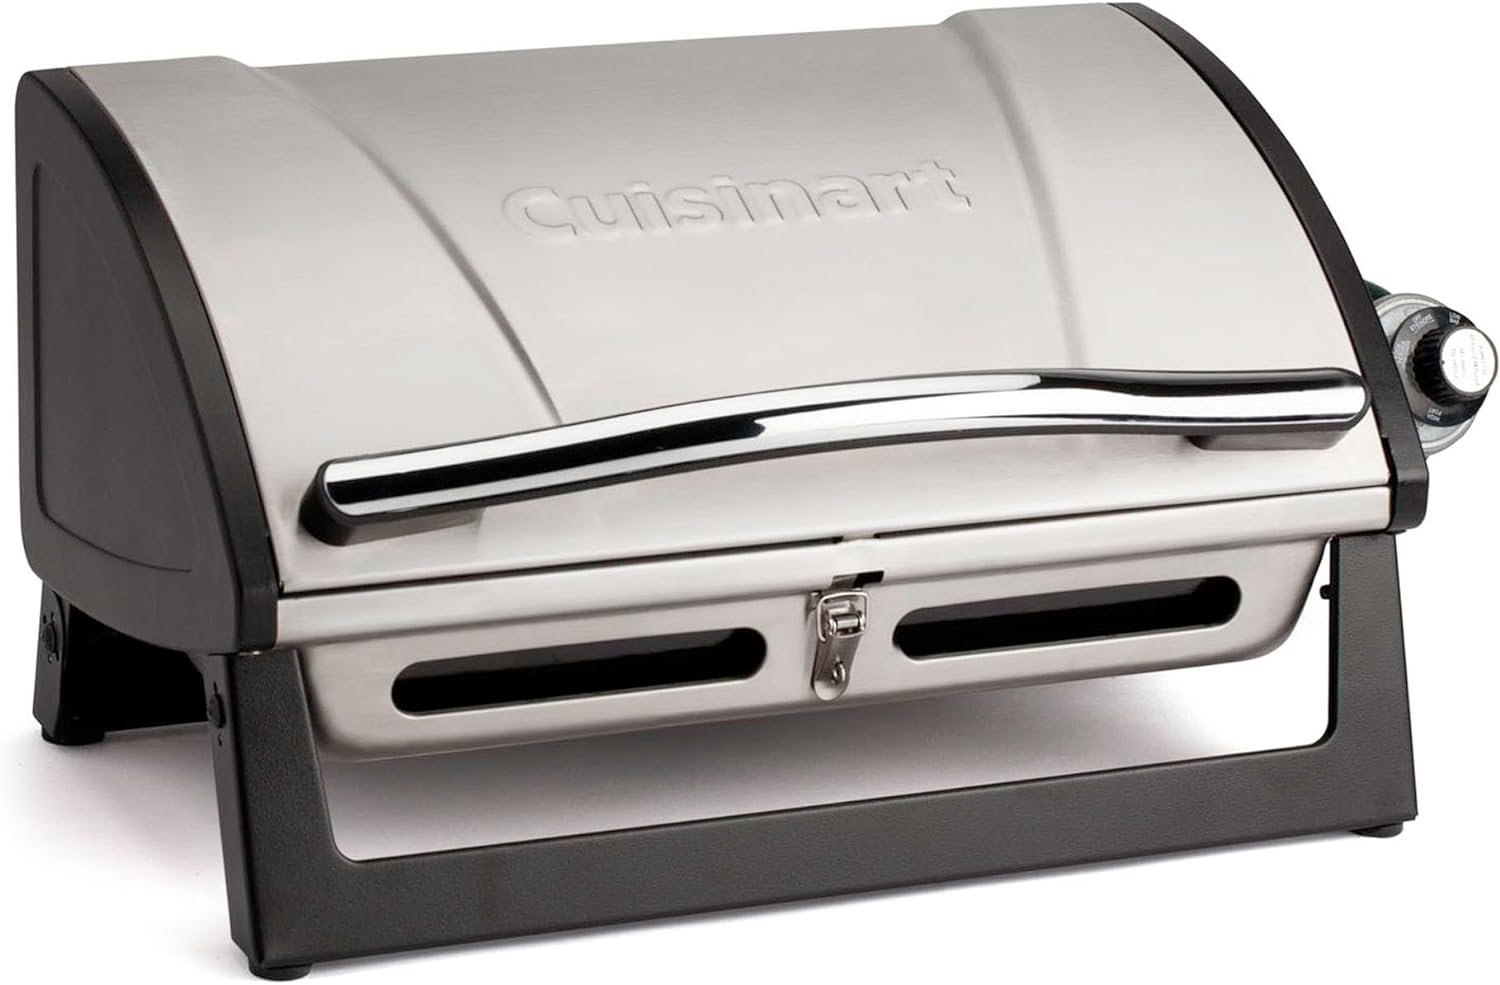 Cuisinart CGG-059A Grillster 8,000 BTU Portable Propane Tabletop Gas Grill